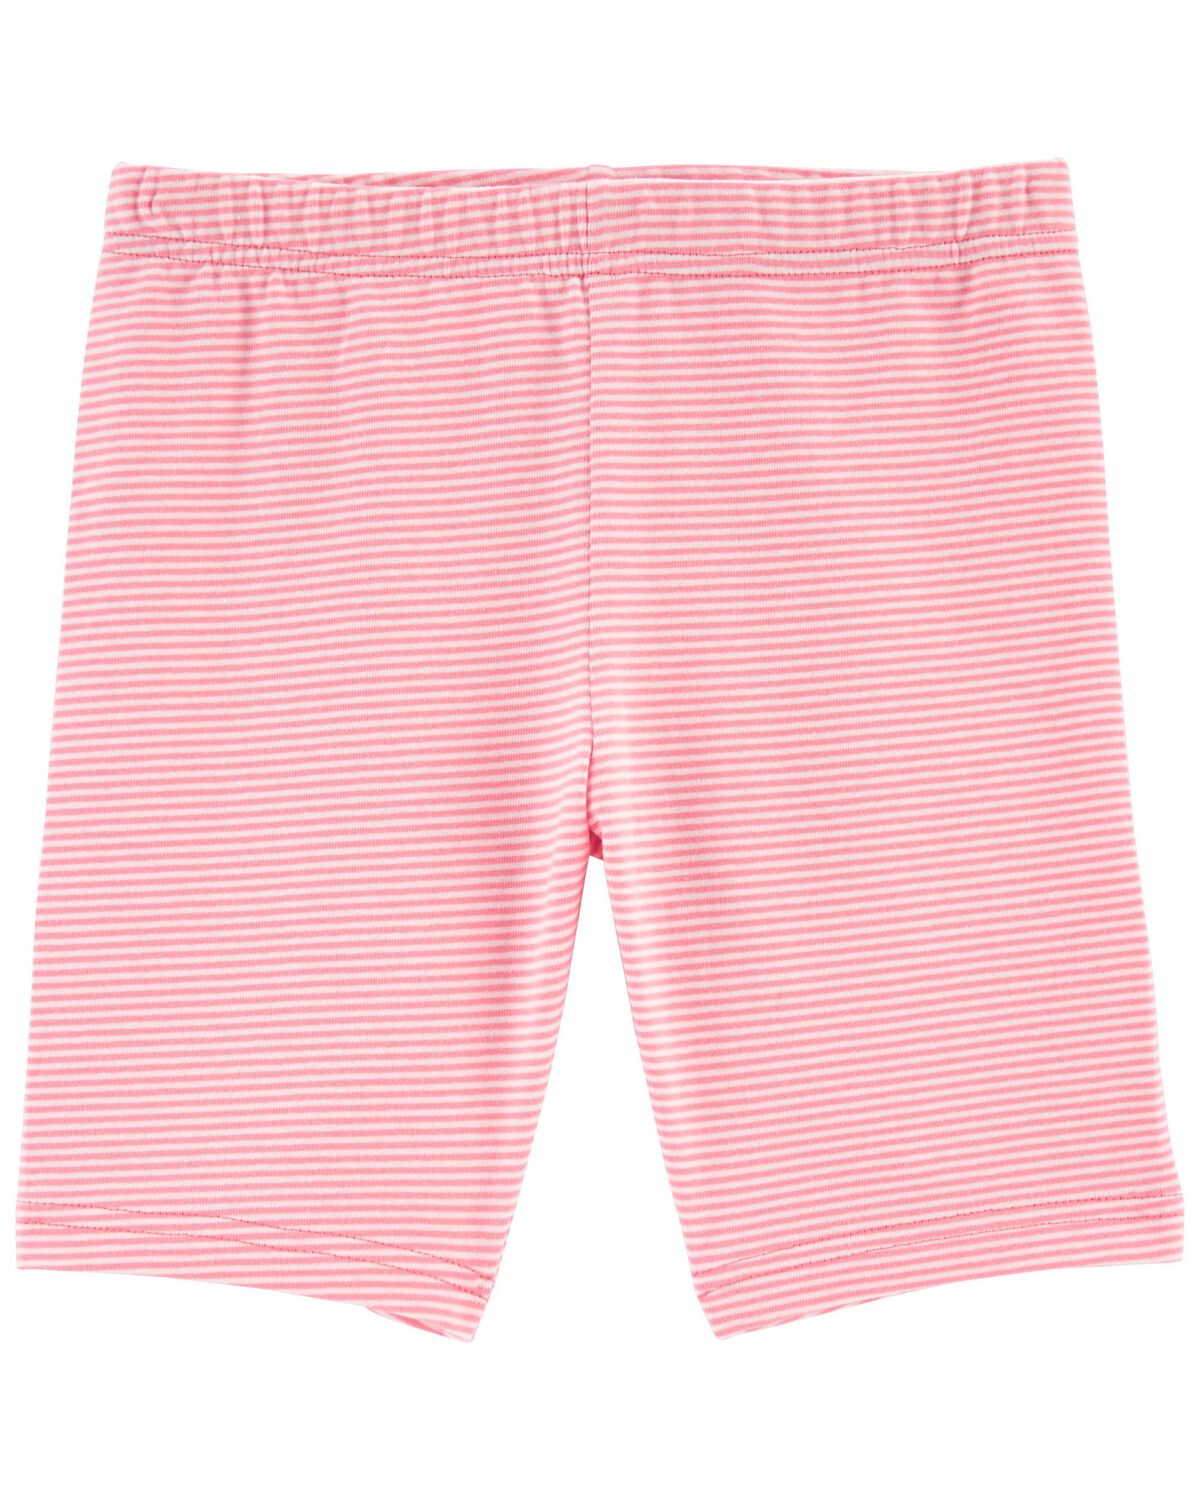 Pink Kid Striped Bike Shorts | carters.com